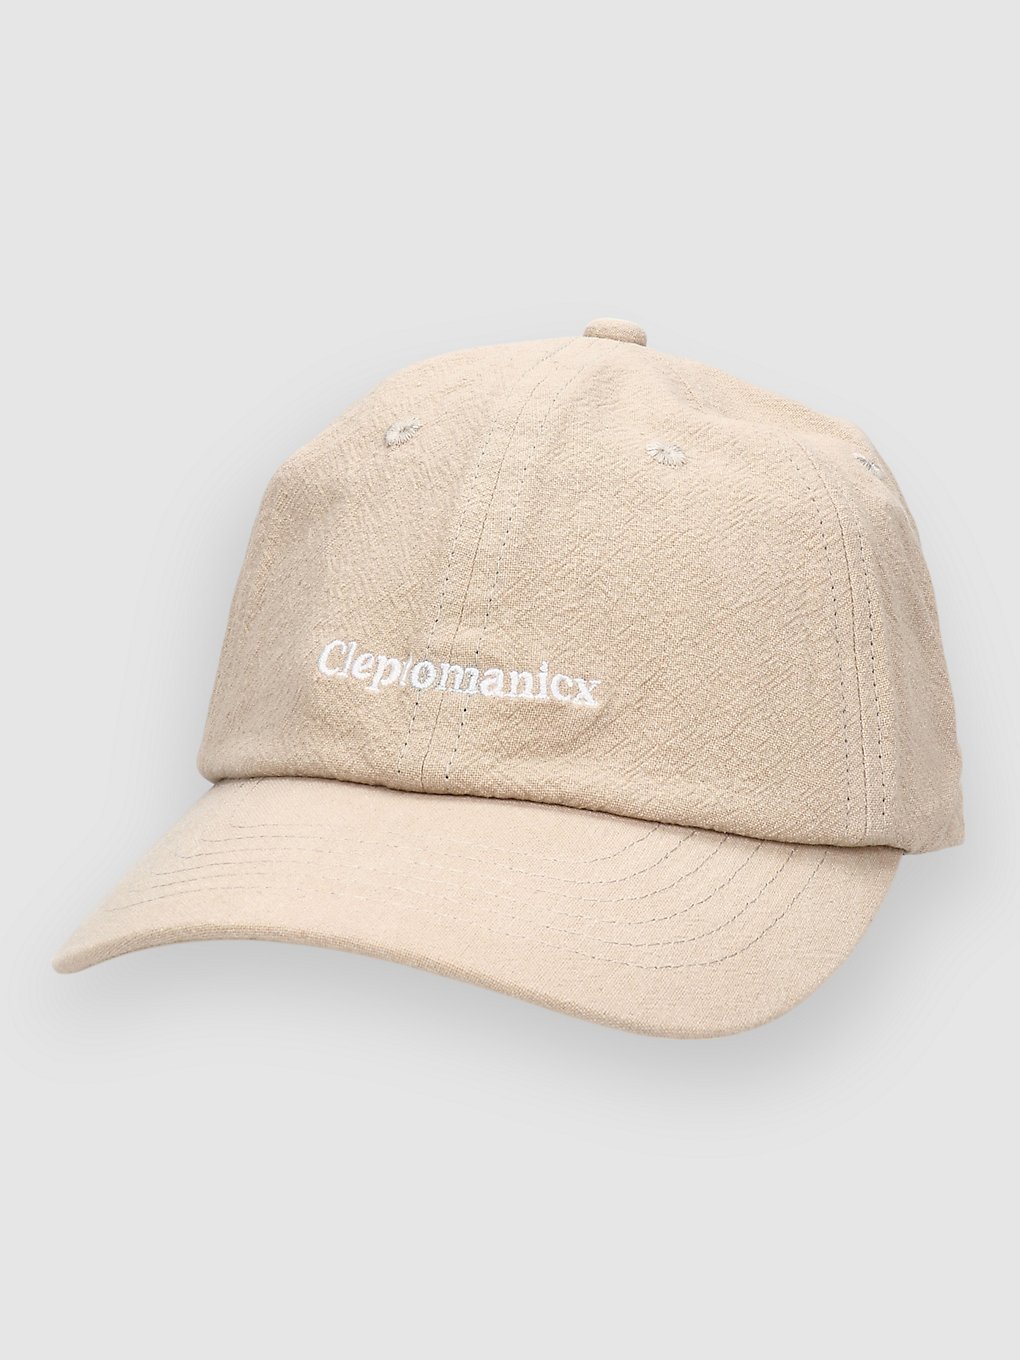 Cleptomanicx Steezy Linen Cap nomad kaufen